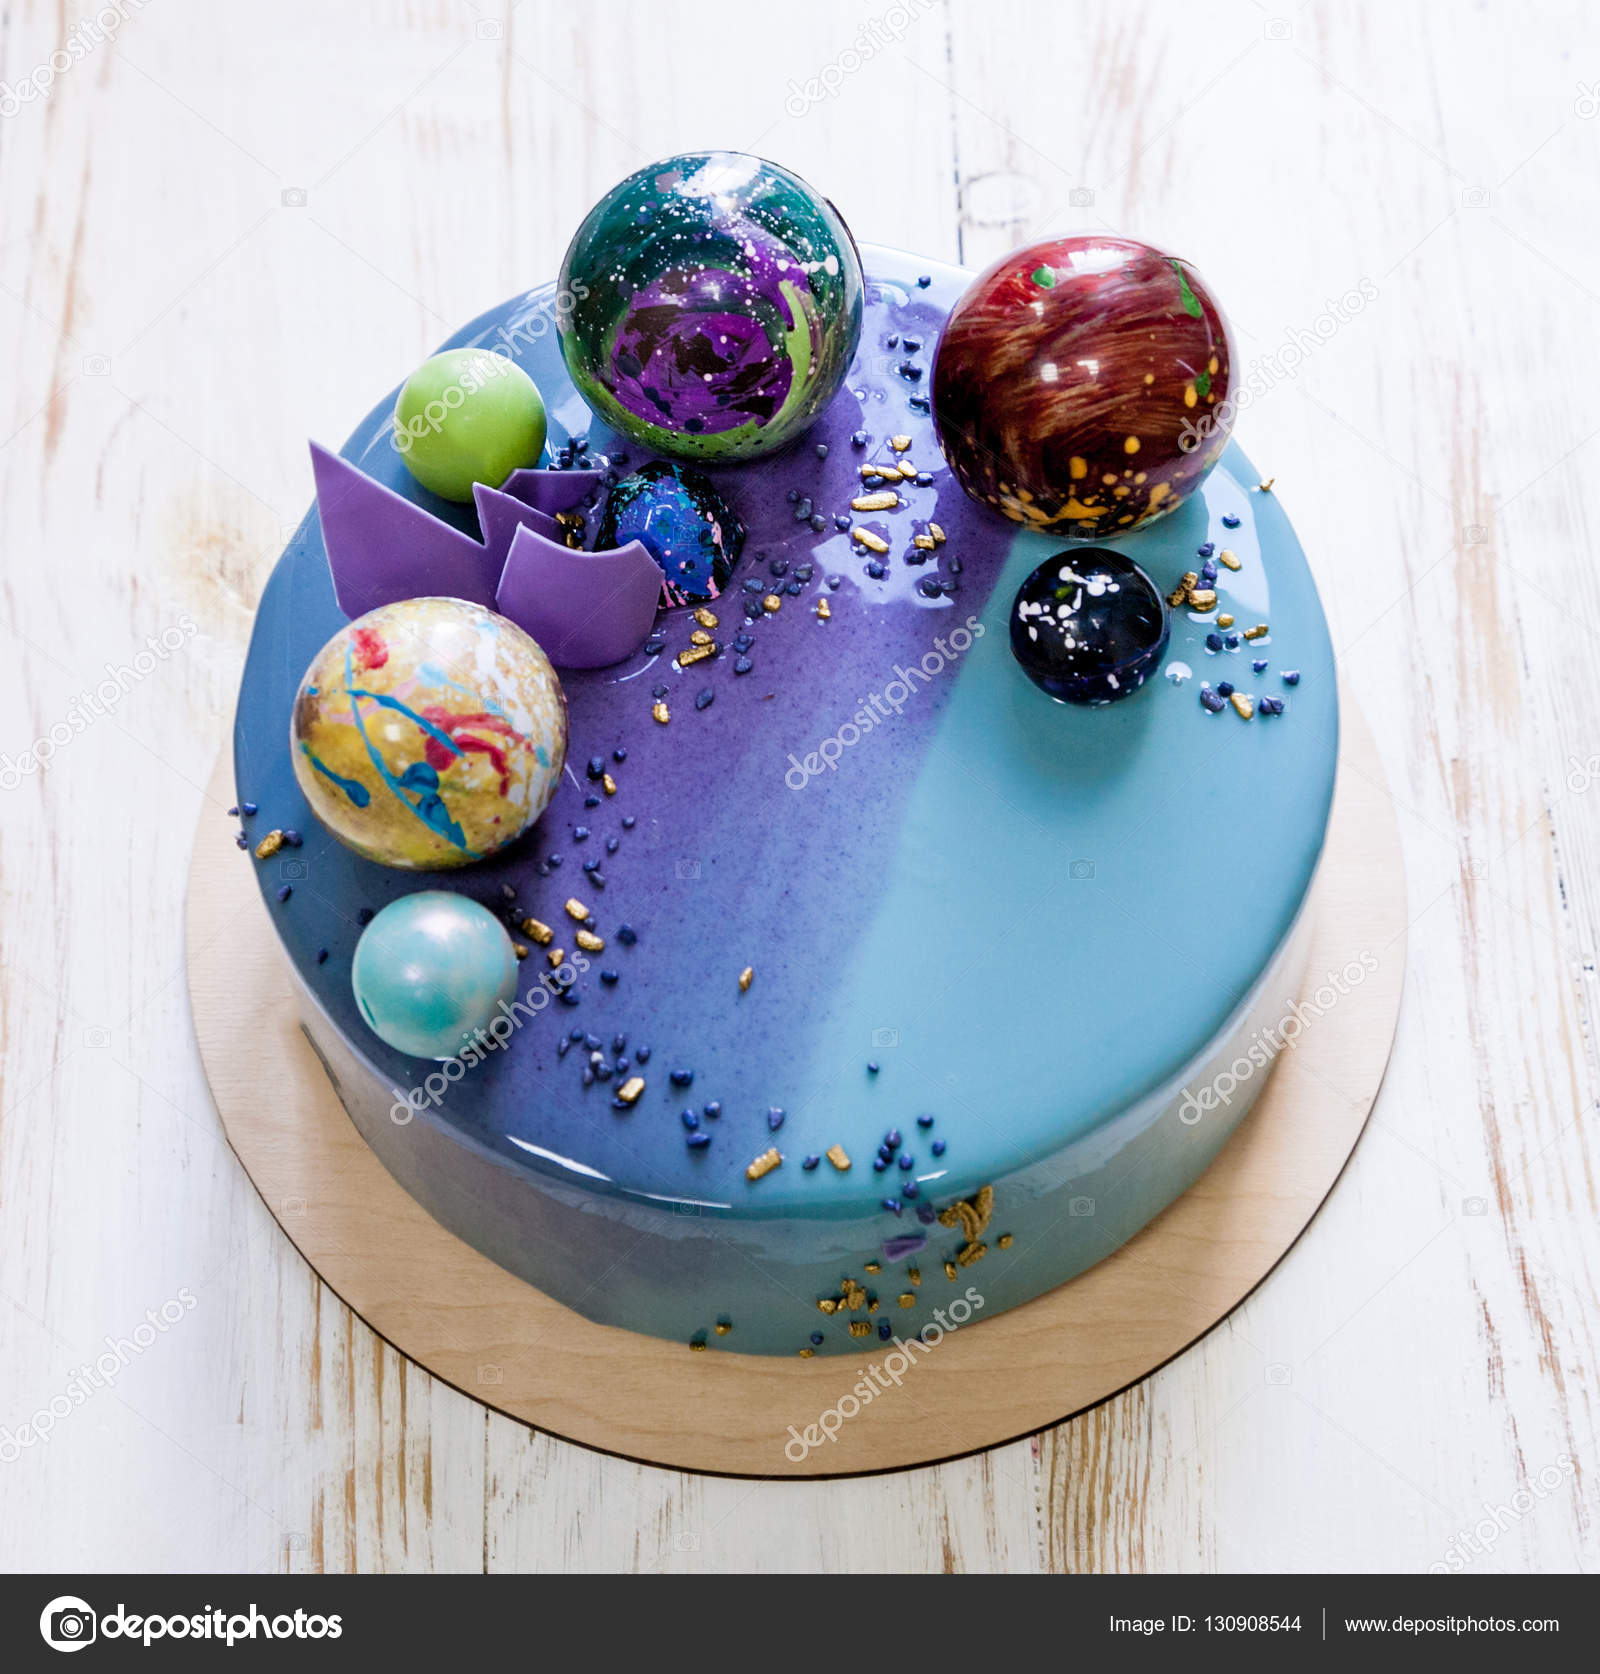 depositphotos_130908544-stock-photo-modern-trendy-mousse-cake-with